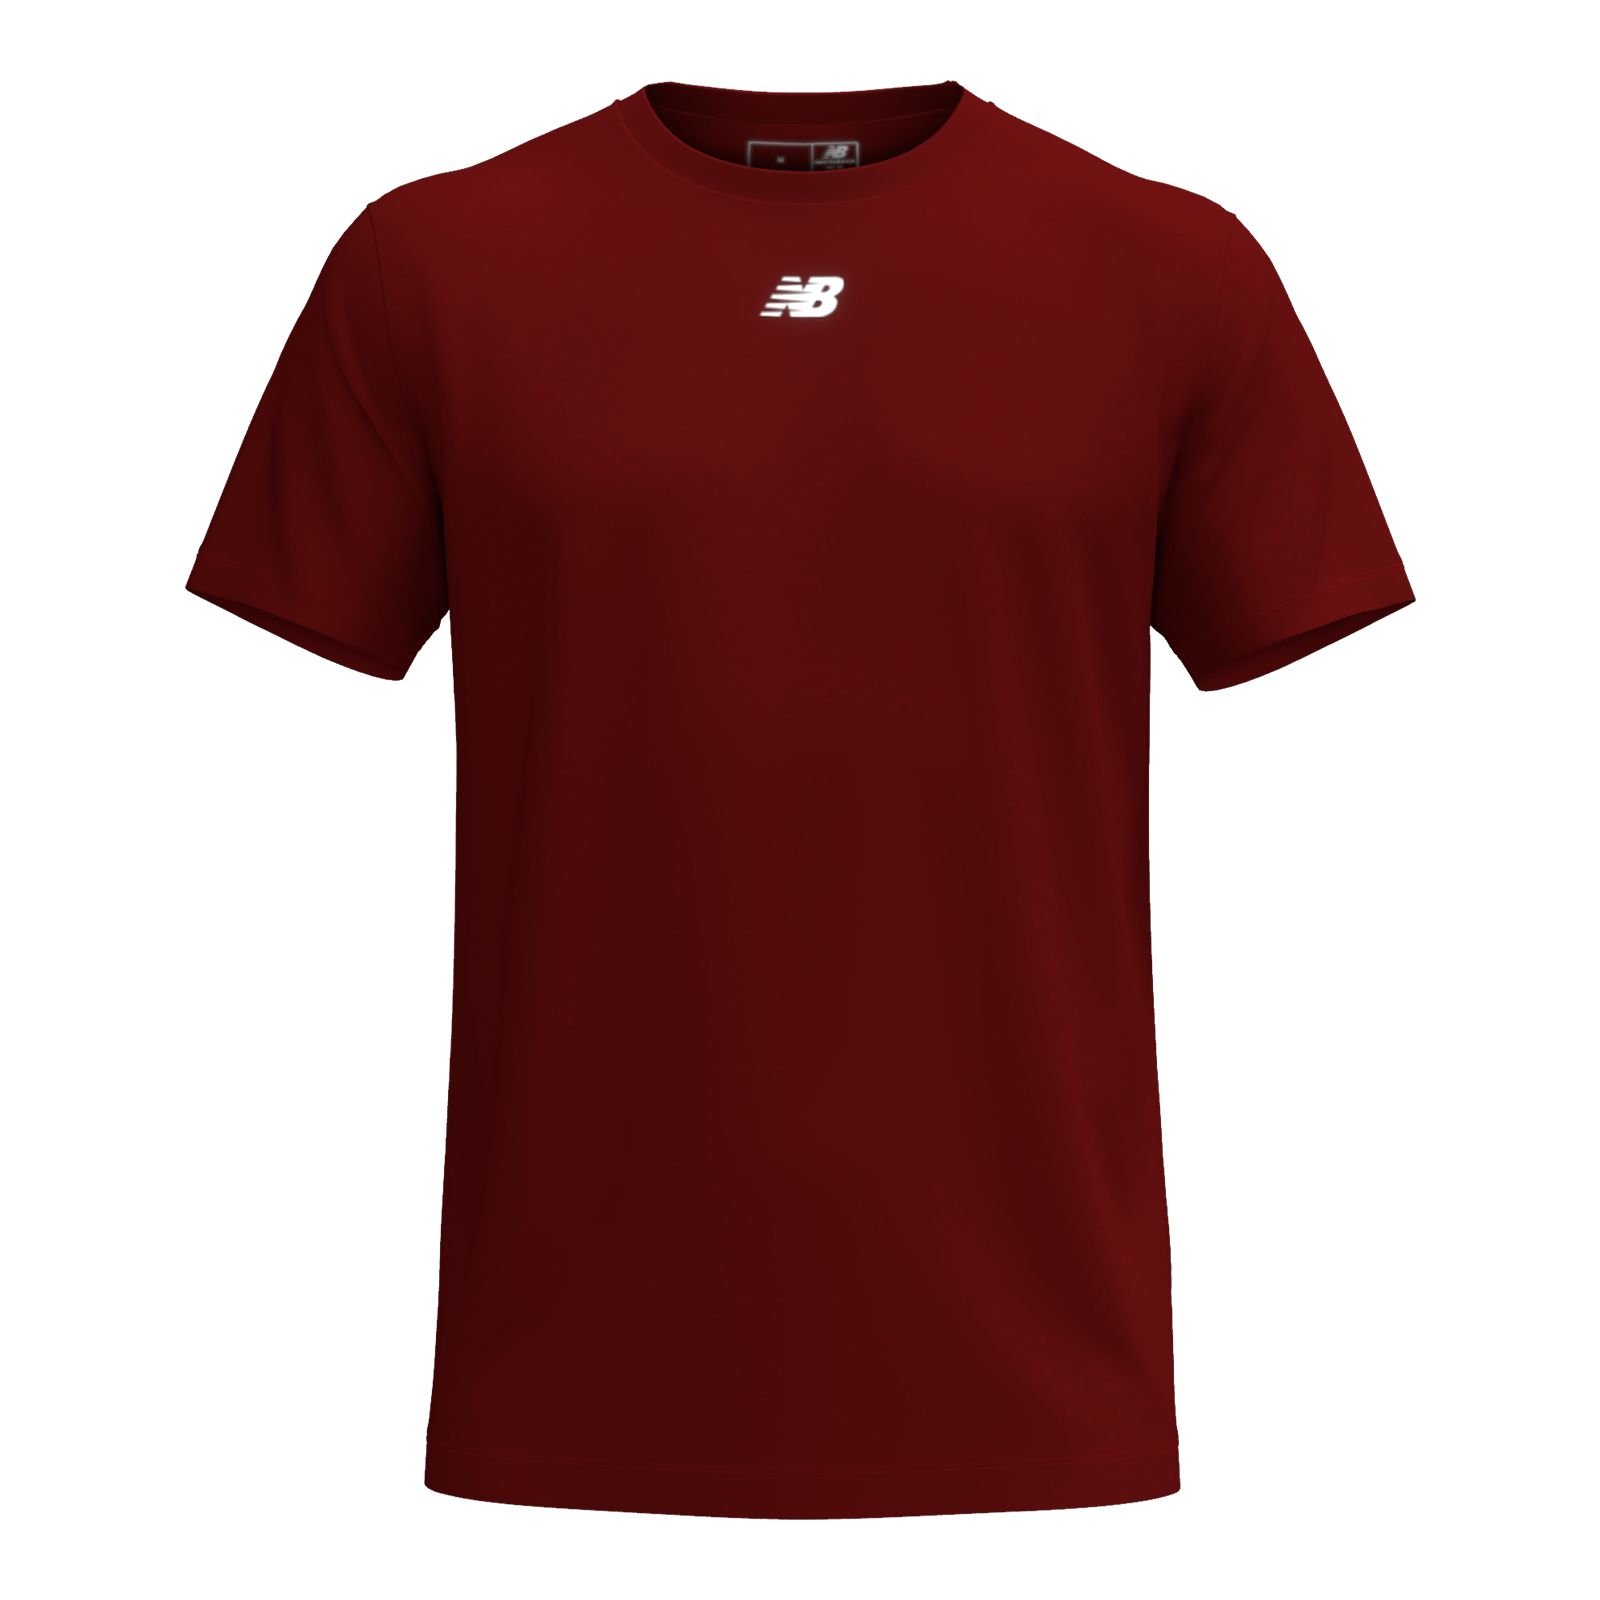 YBA Shirts - Get Custom Business, Sport and School Apparel